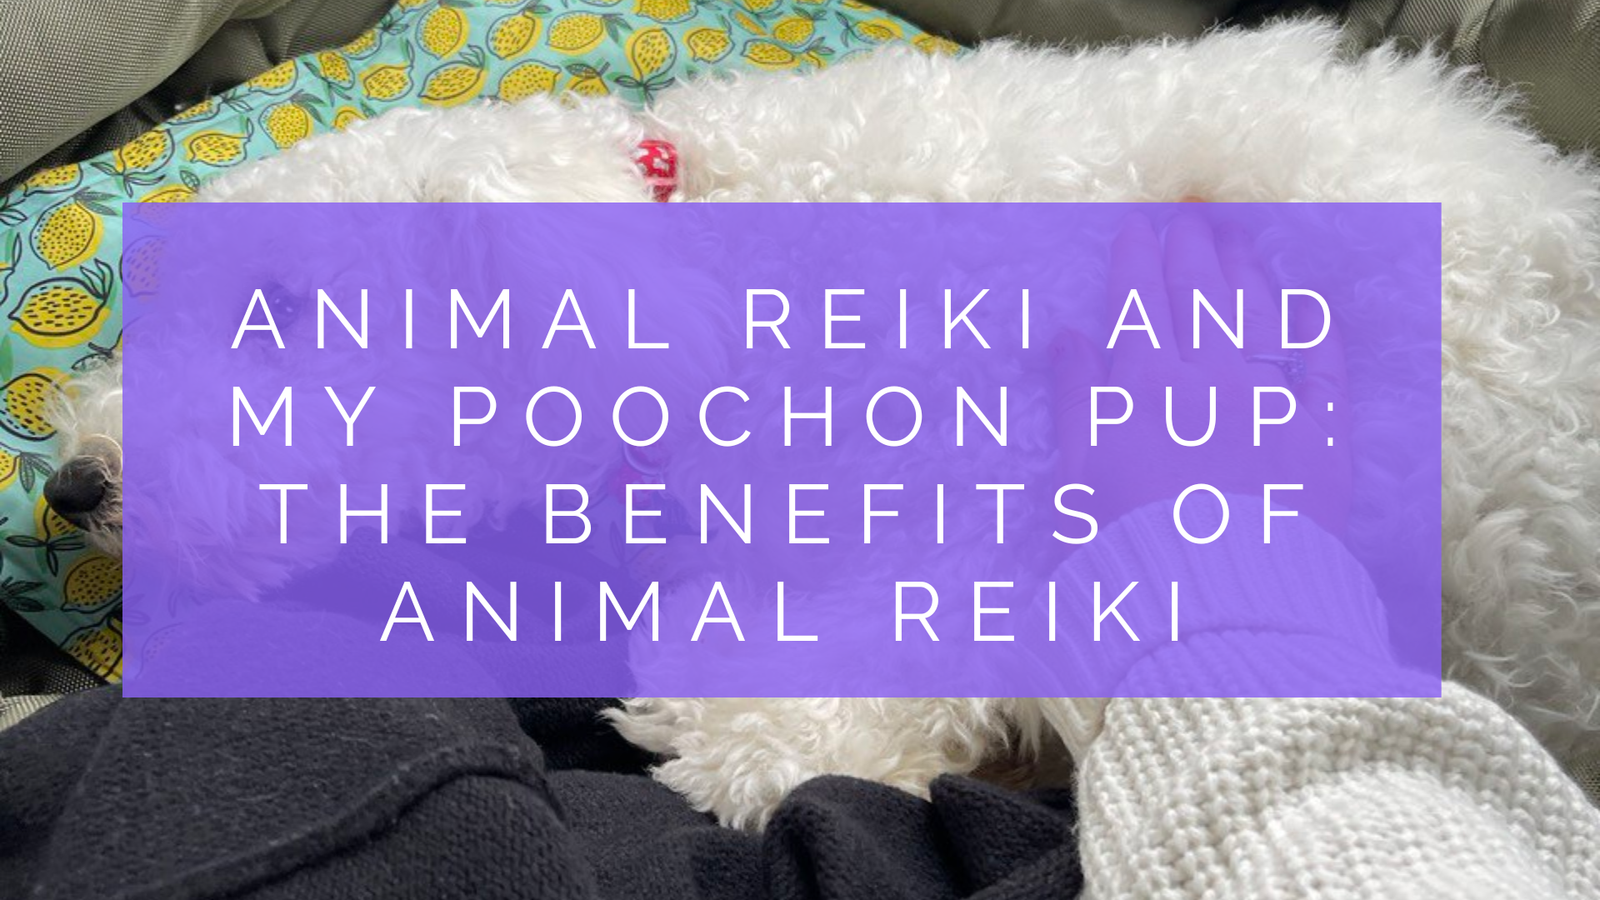 How Animal Reiki Helped My Poochon Pup: Benefits of Animal Reiki